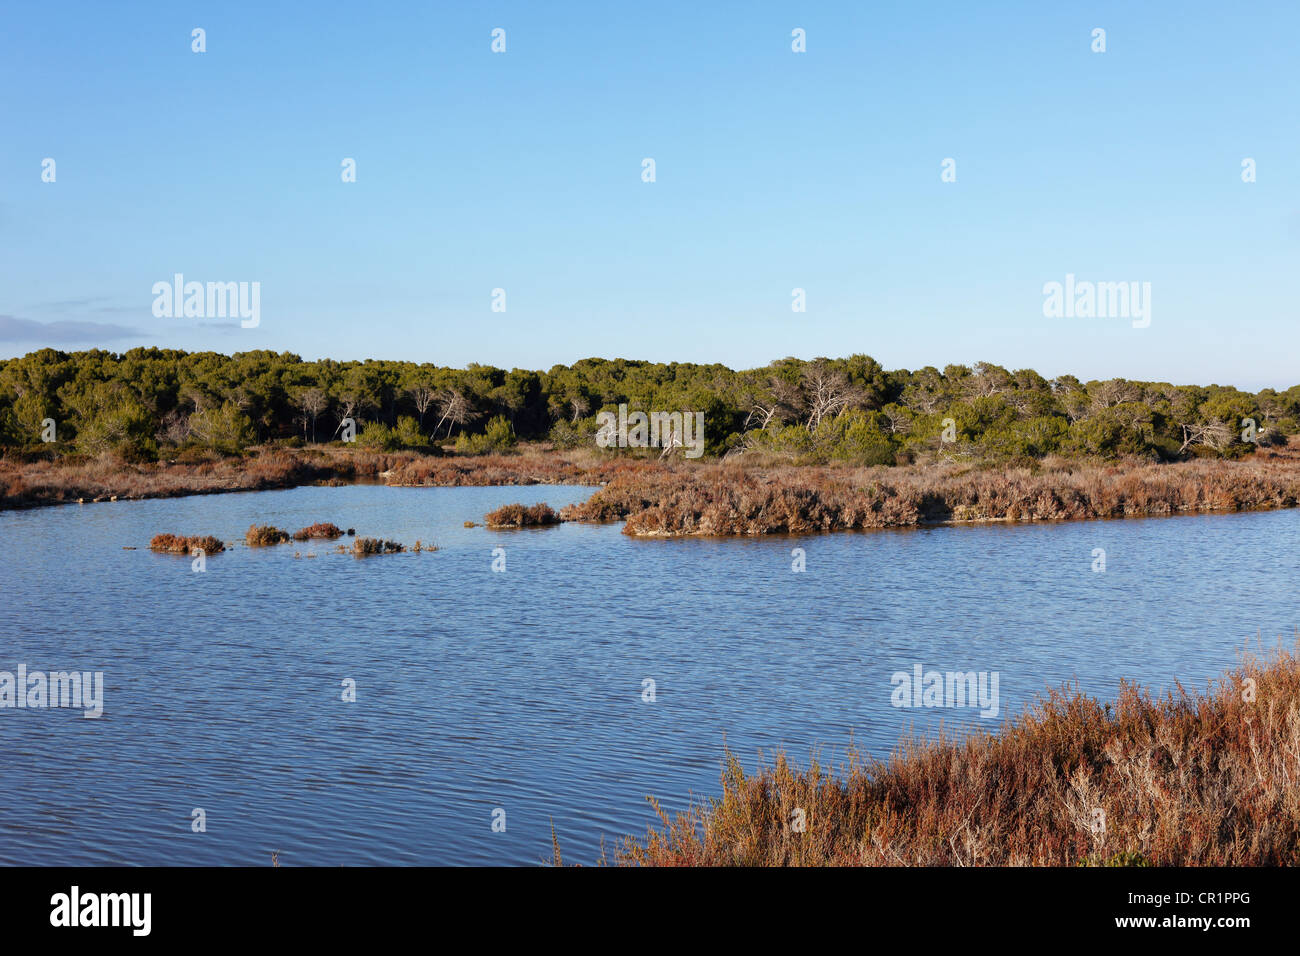 Brackish water between Salines de Levante and es Trenc, Majorca, Balearic Islands, Spain, Europe Stock Photo